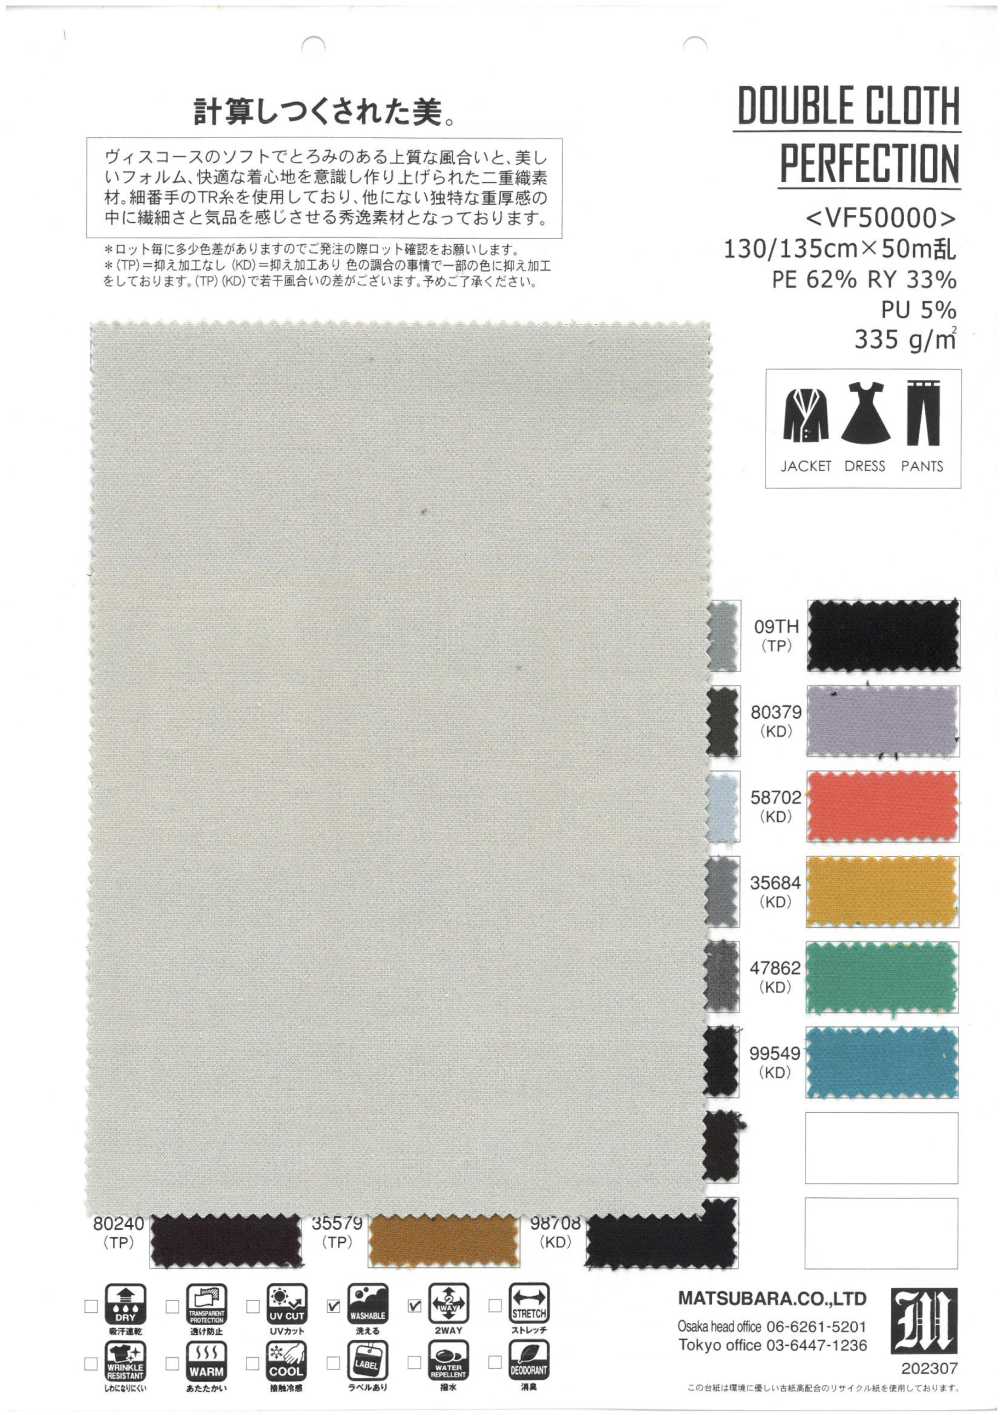 VF50000 DOUBLE CLOTH PERFECTION[Textile / Fabric] Matsubara